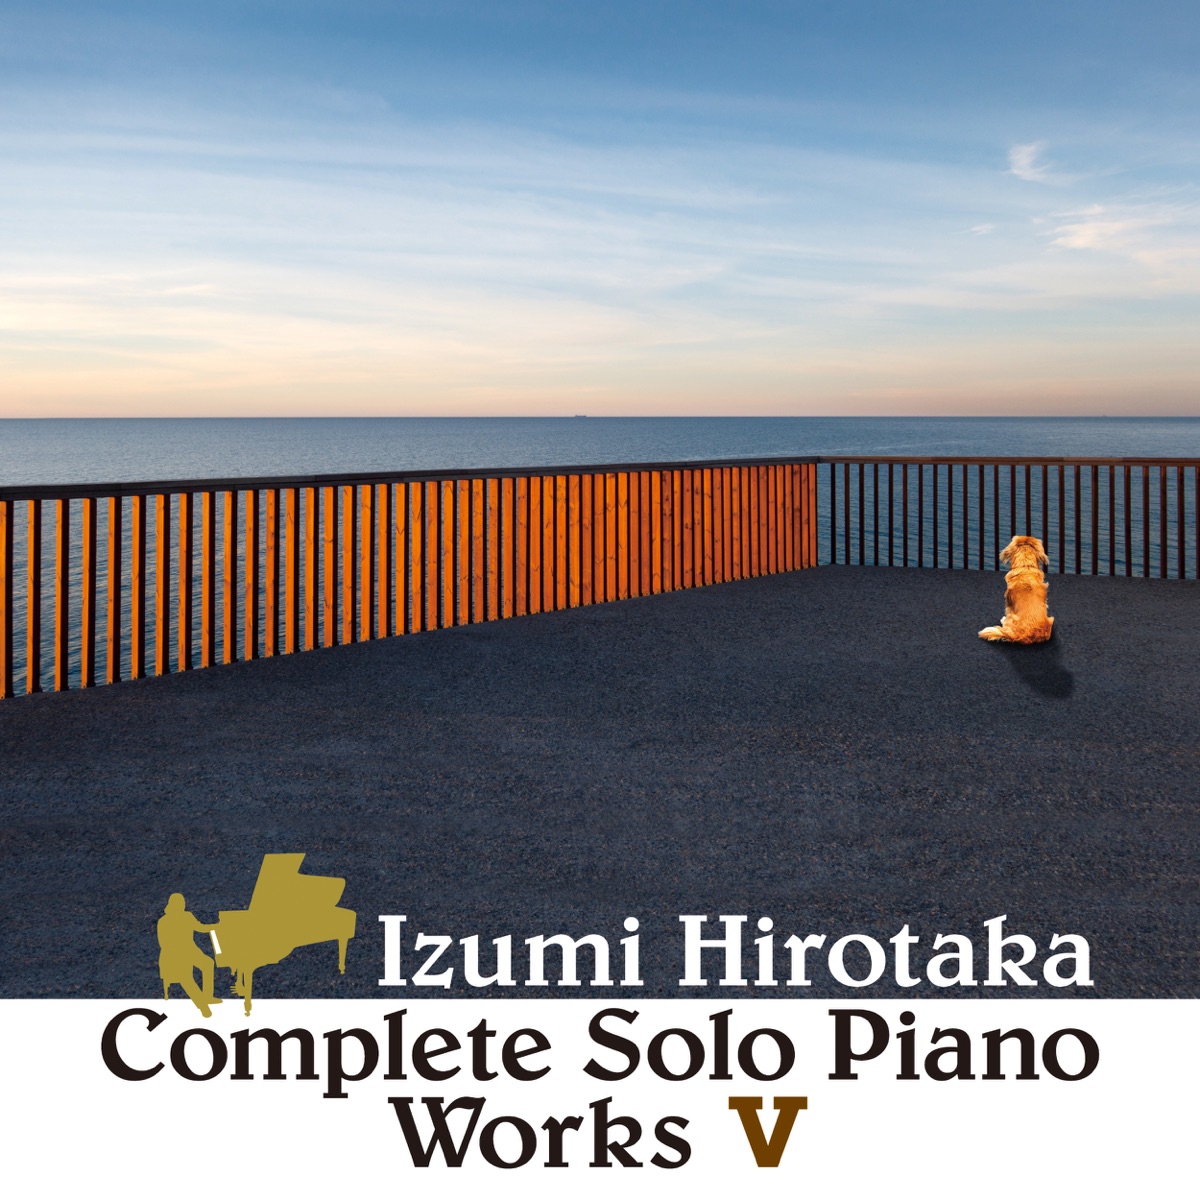 Complete Solo Piano Works Ⅴ - Album by Hirotaka Izumi - Apple Music